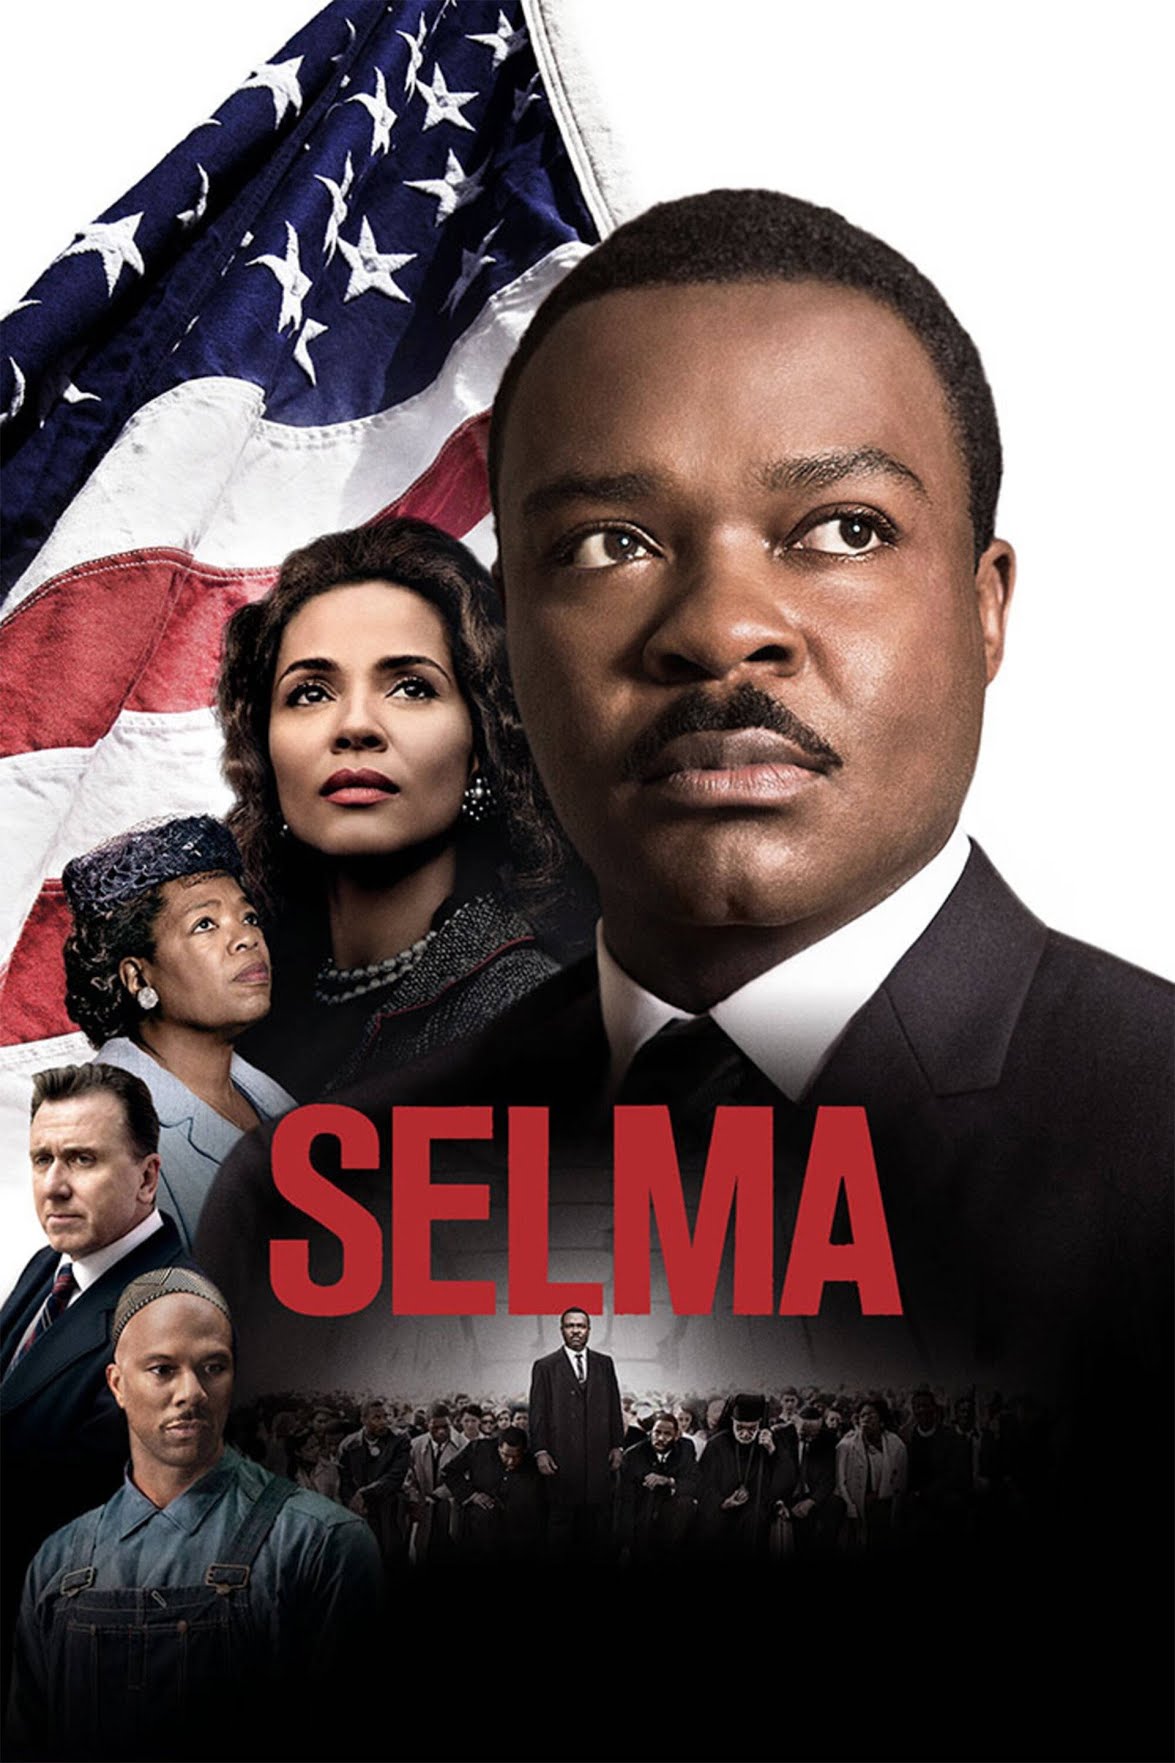 "Selma" Cover Art